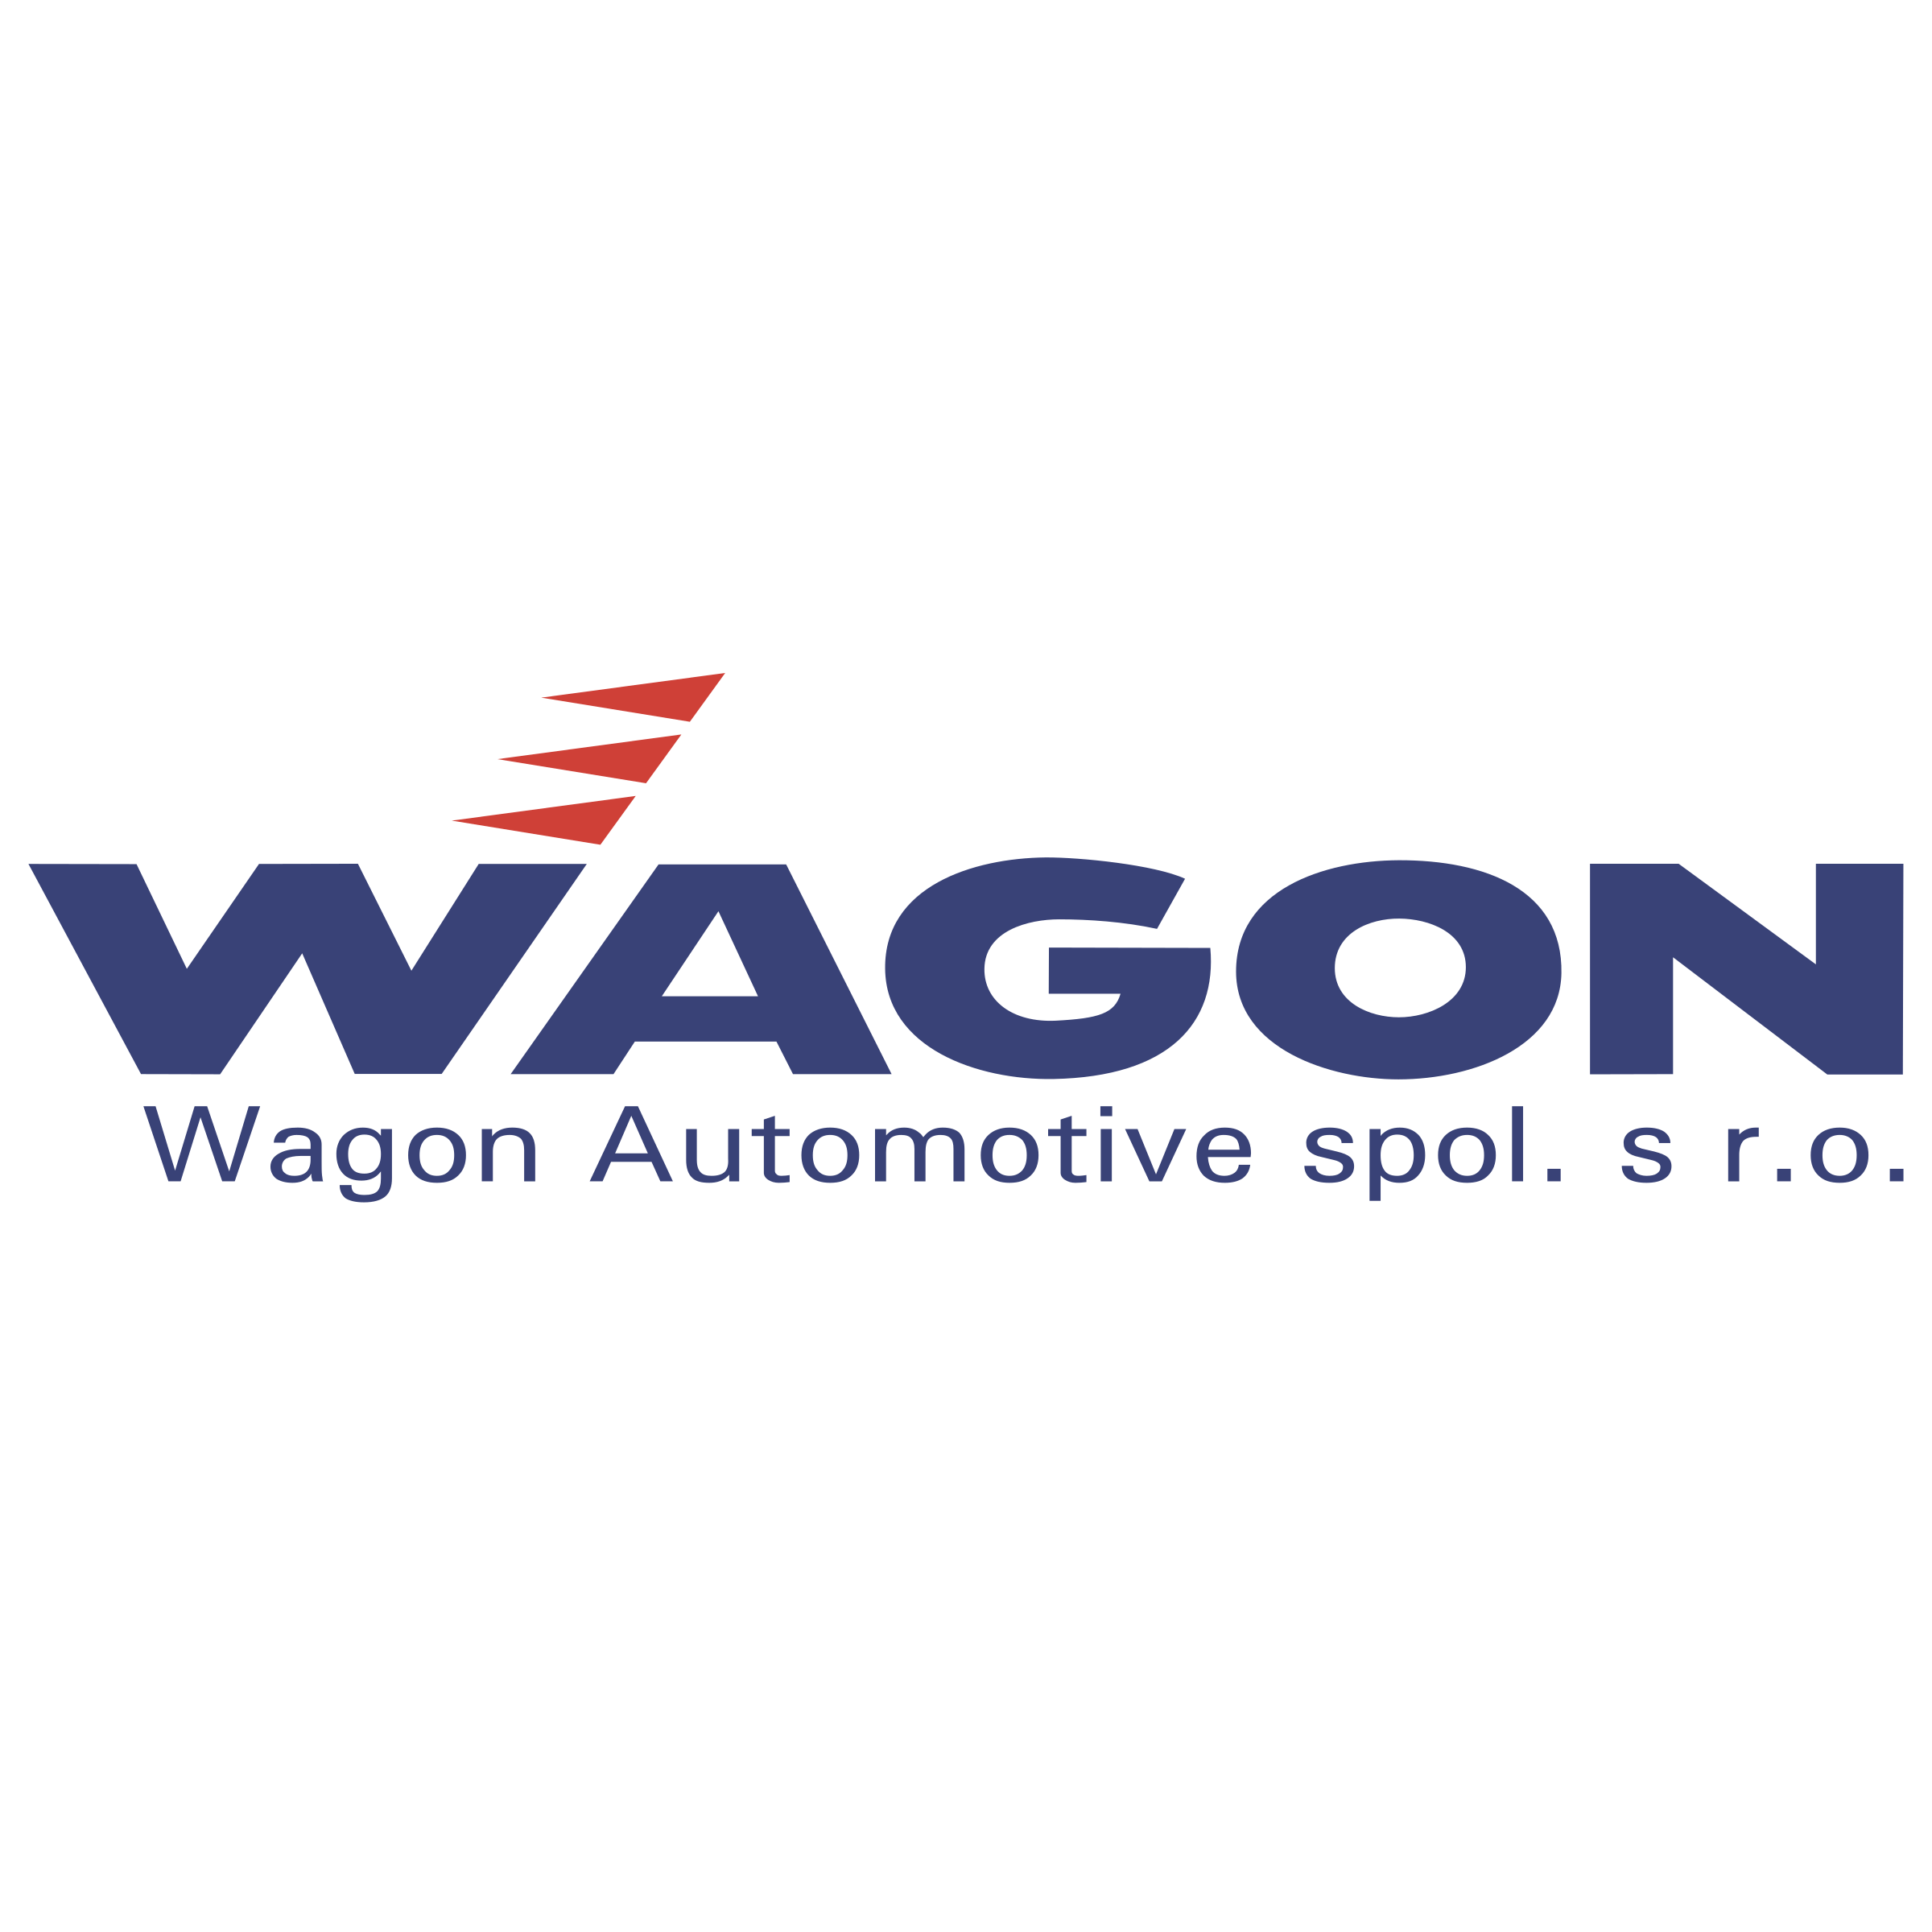 Wagon Logo - Wagon Logo PNG Transparent & SVG Vector - Freebie Supply